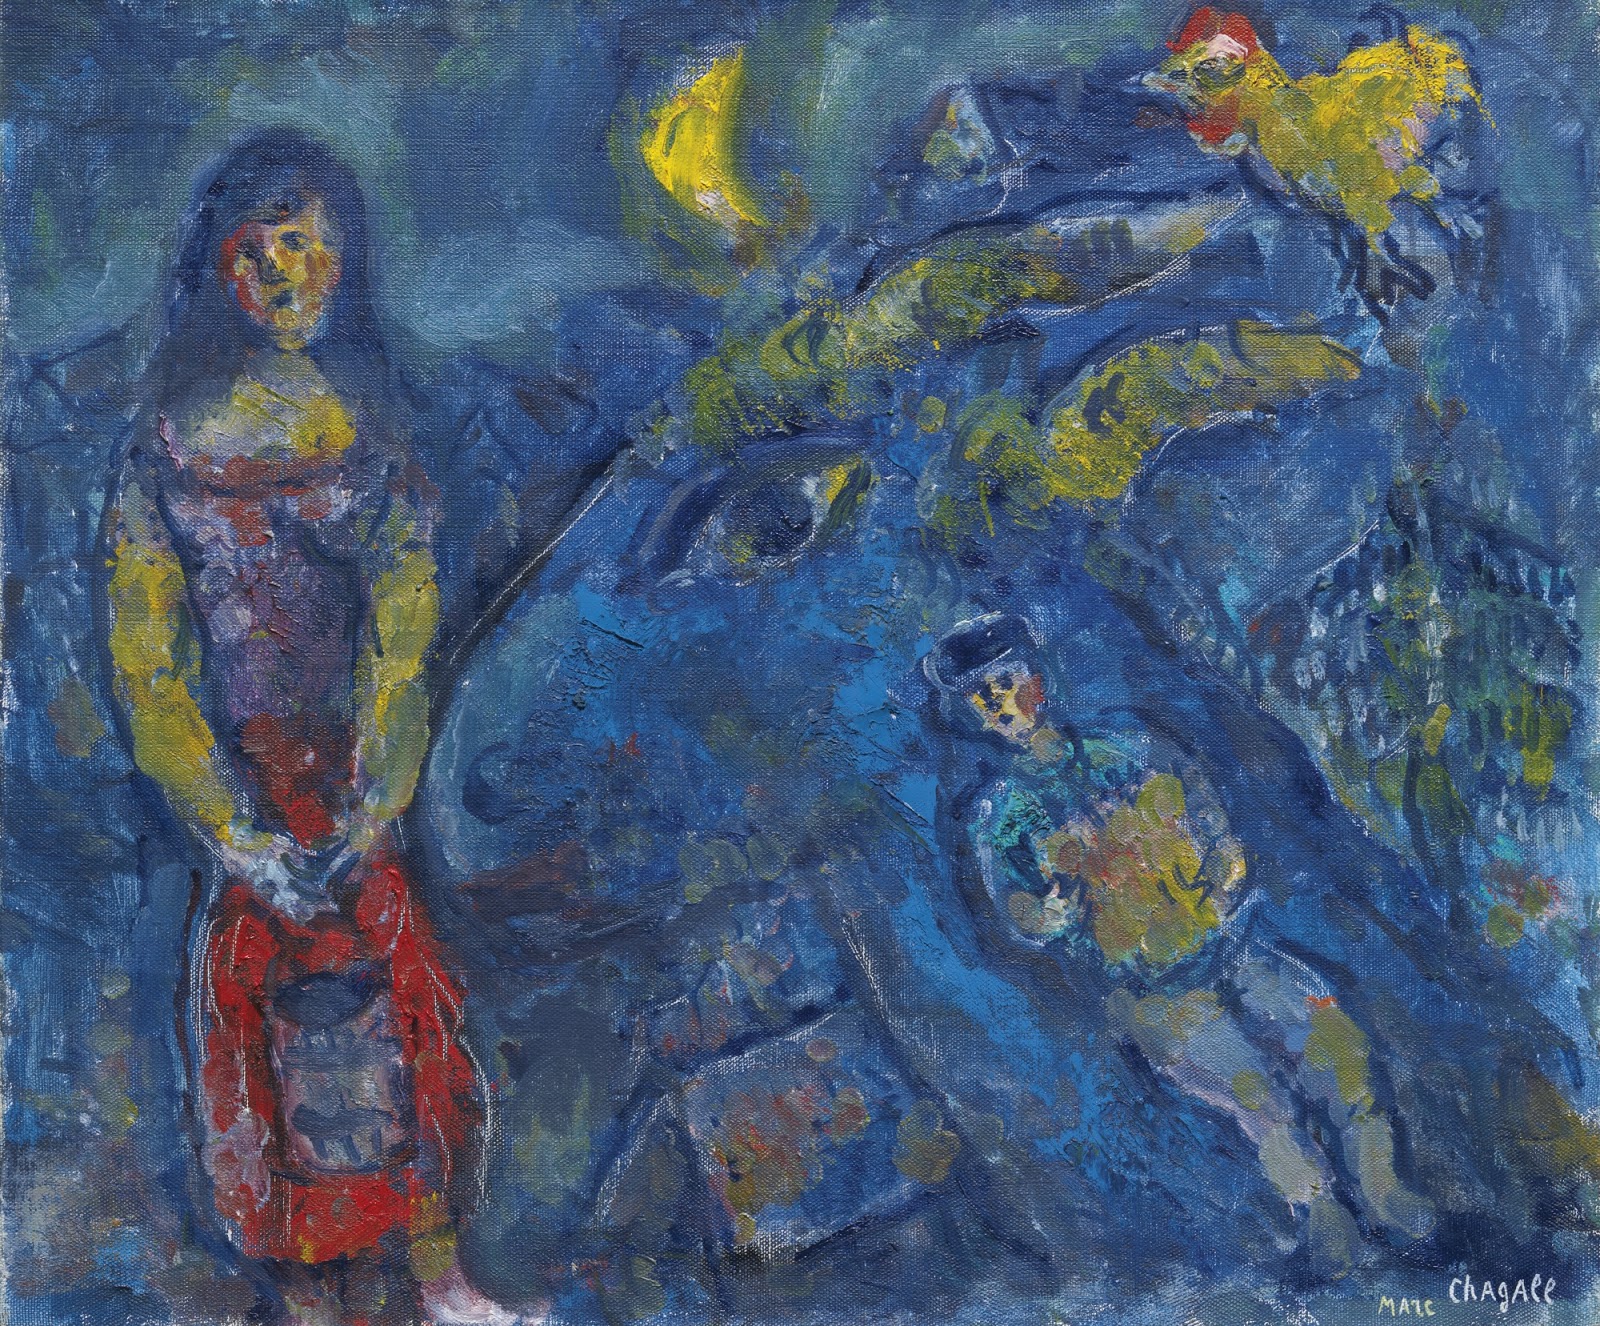 Marc+Chagall-1887-1985 (398).jpg